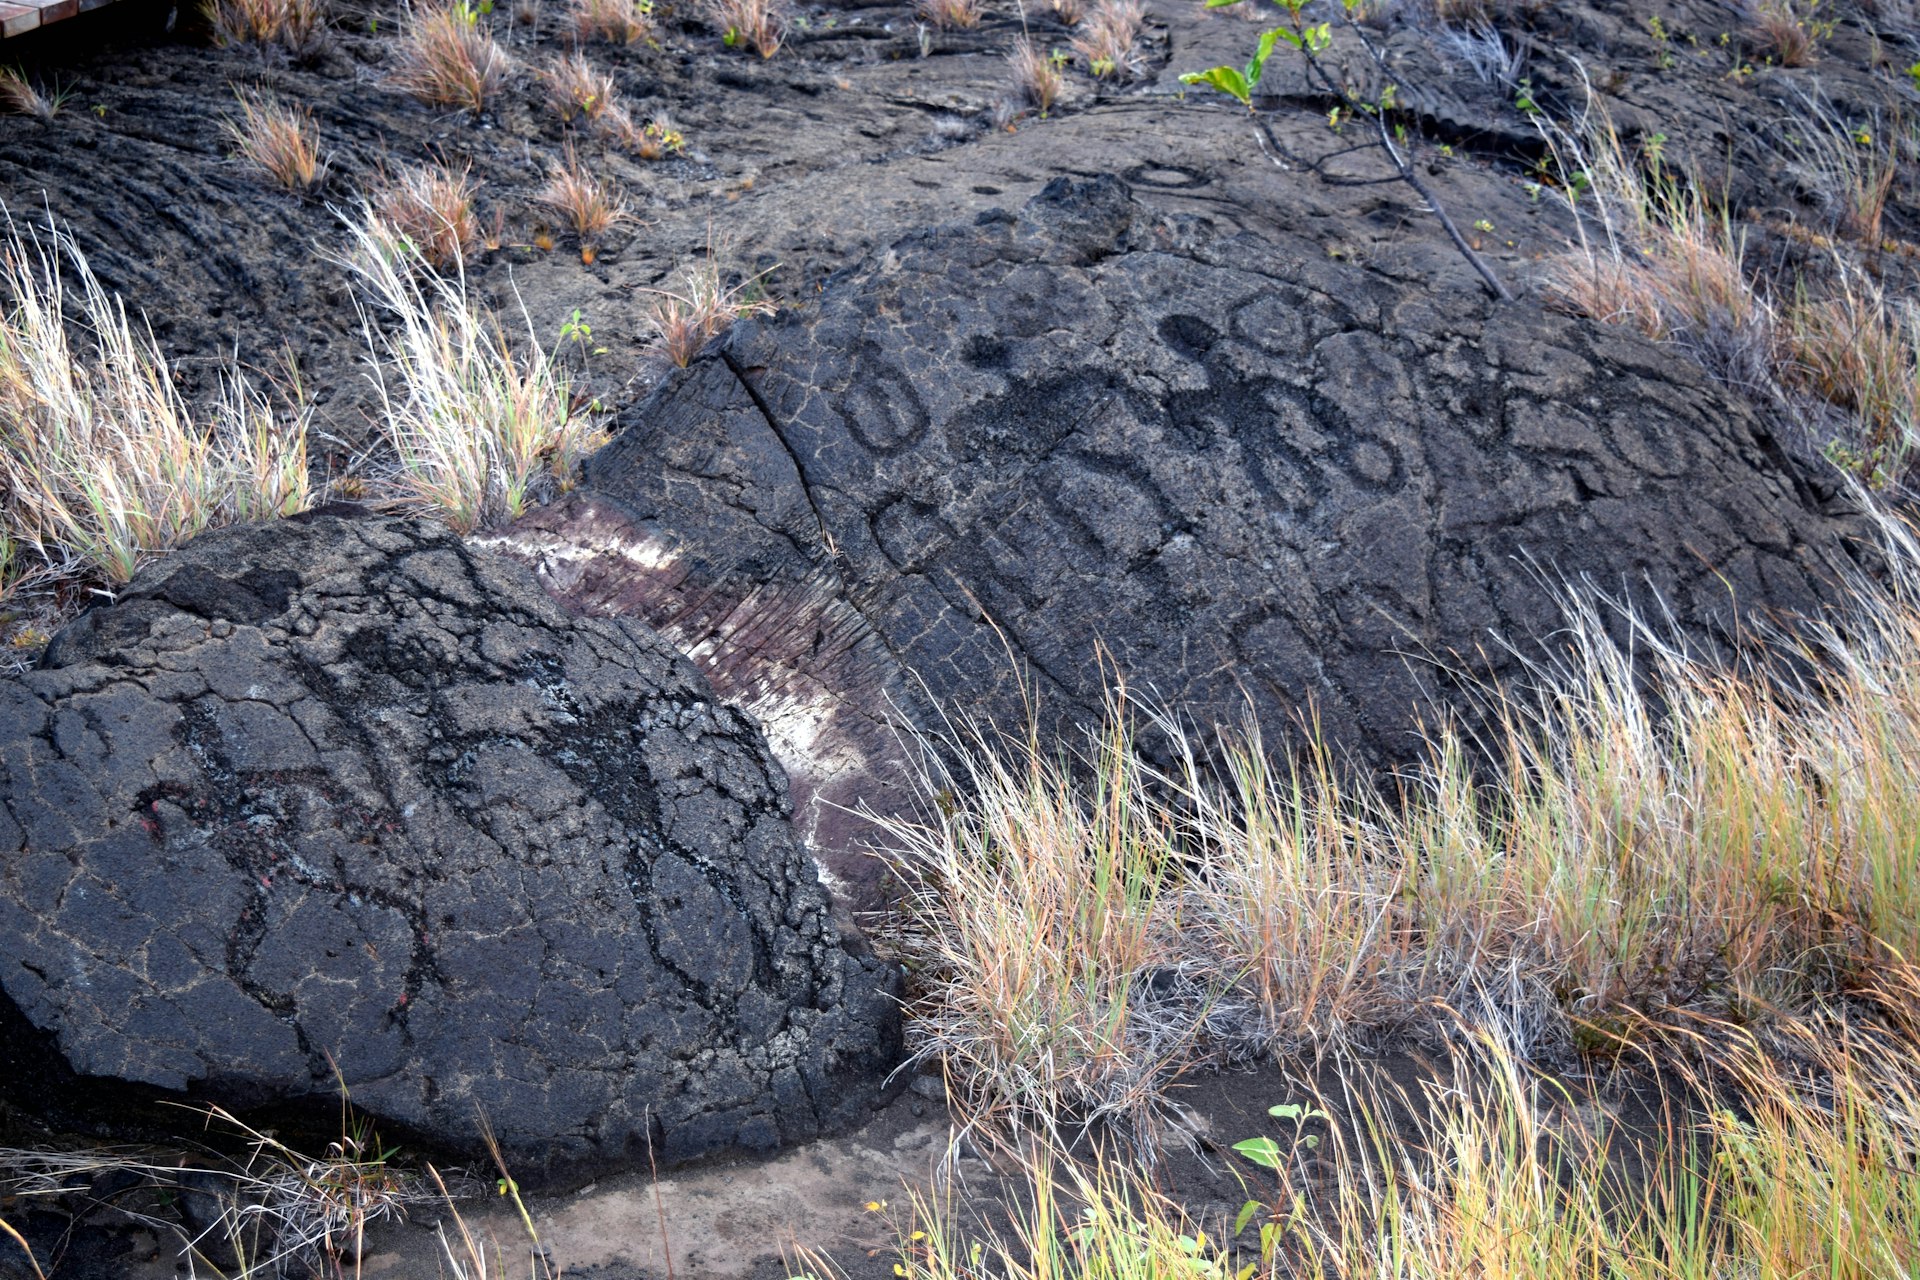 Petroglyphs carved into a rock